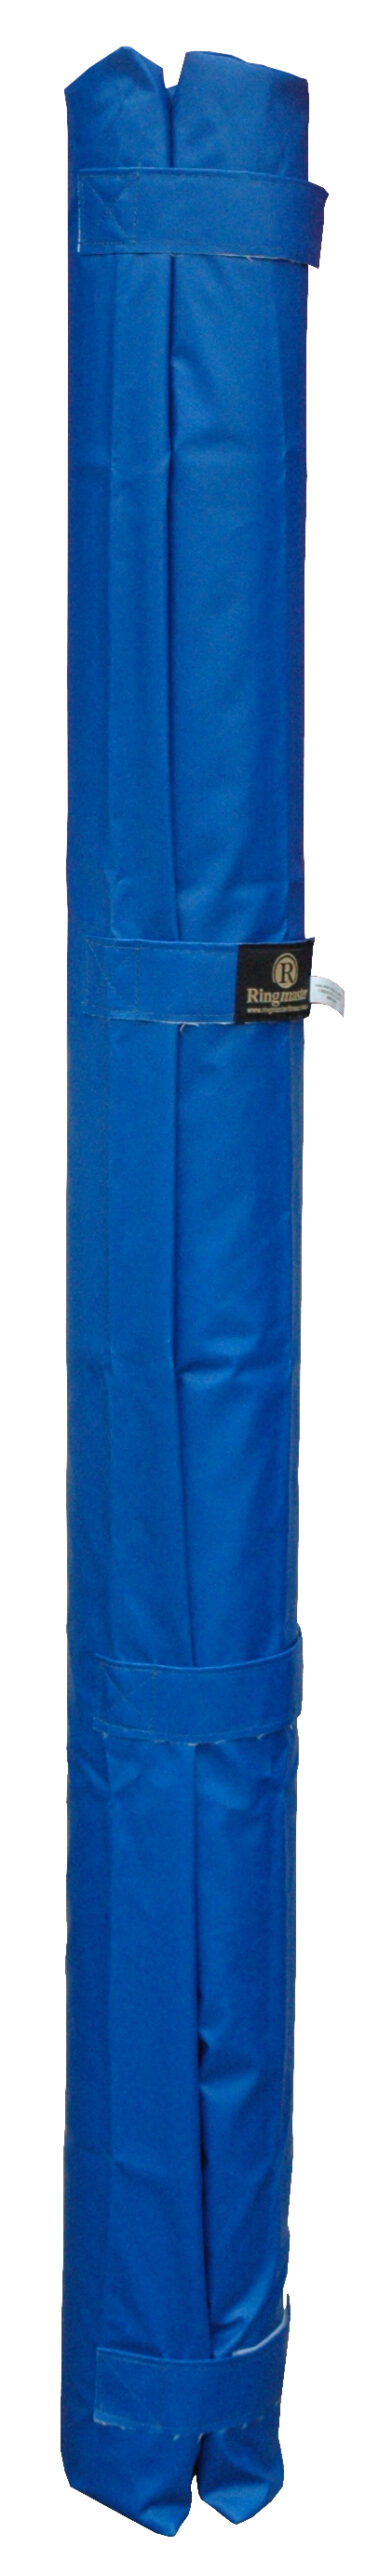 Netball Cylindrical Goal Post Guard - blue